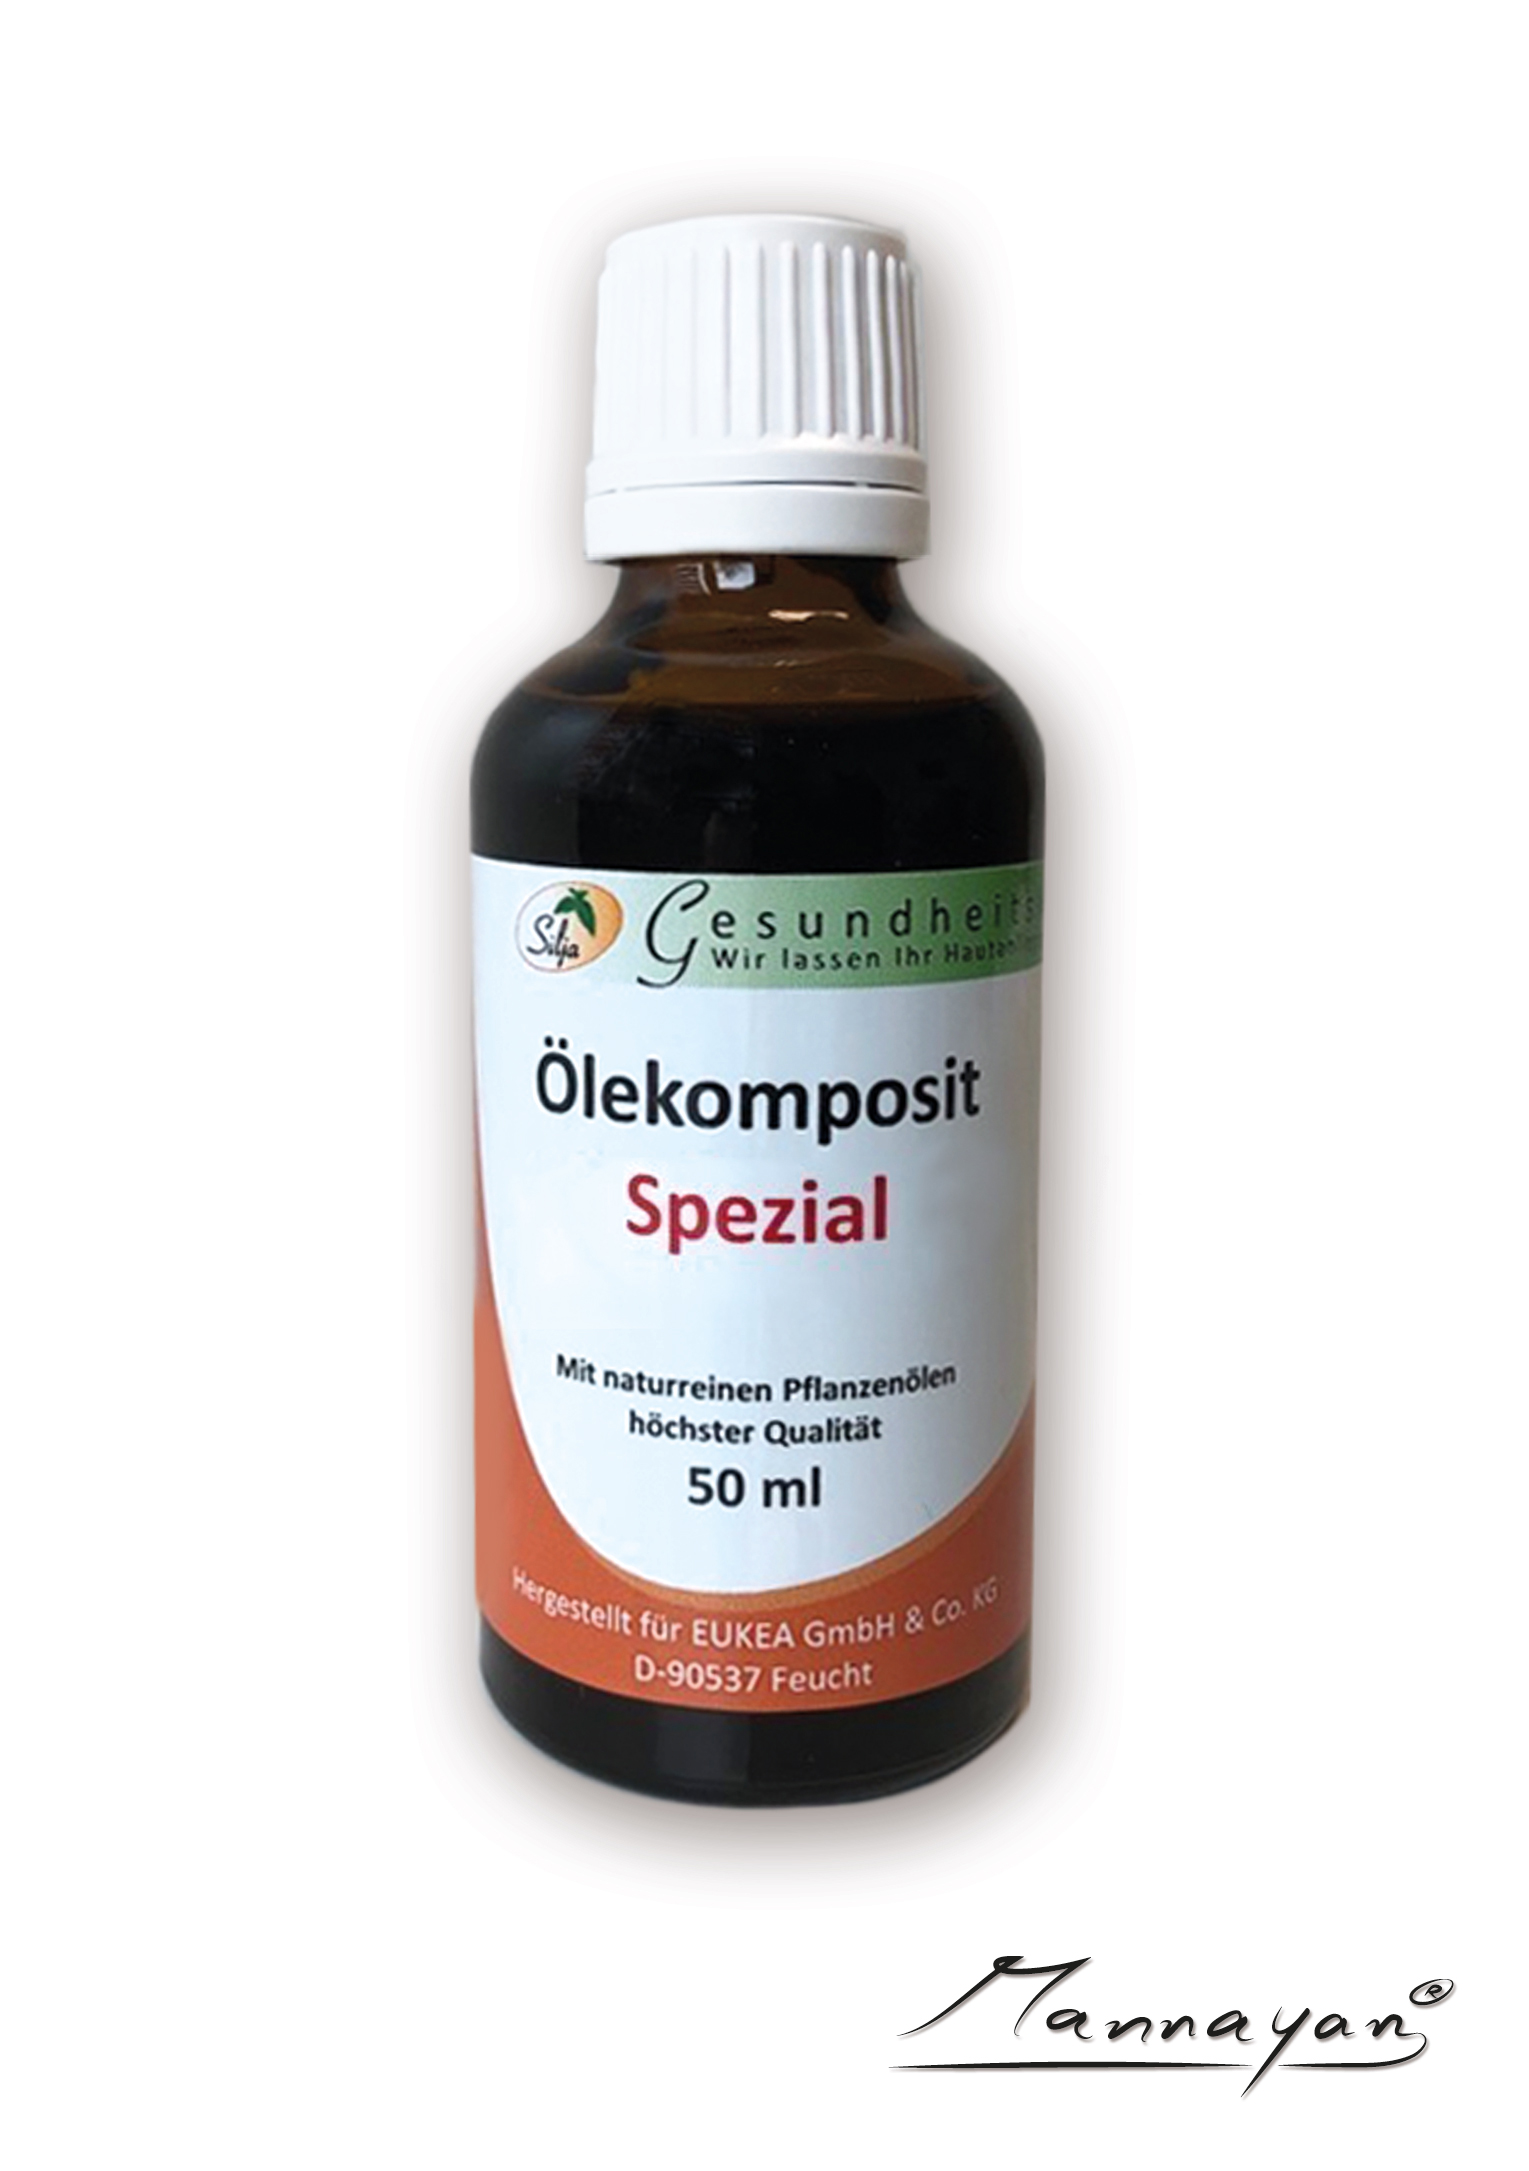 Ölekomposit Spezial (oil composite special)